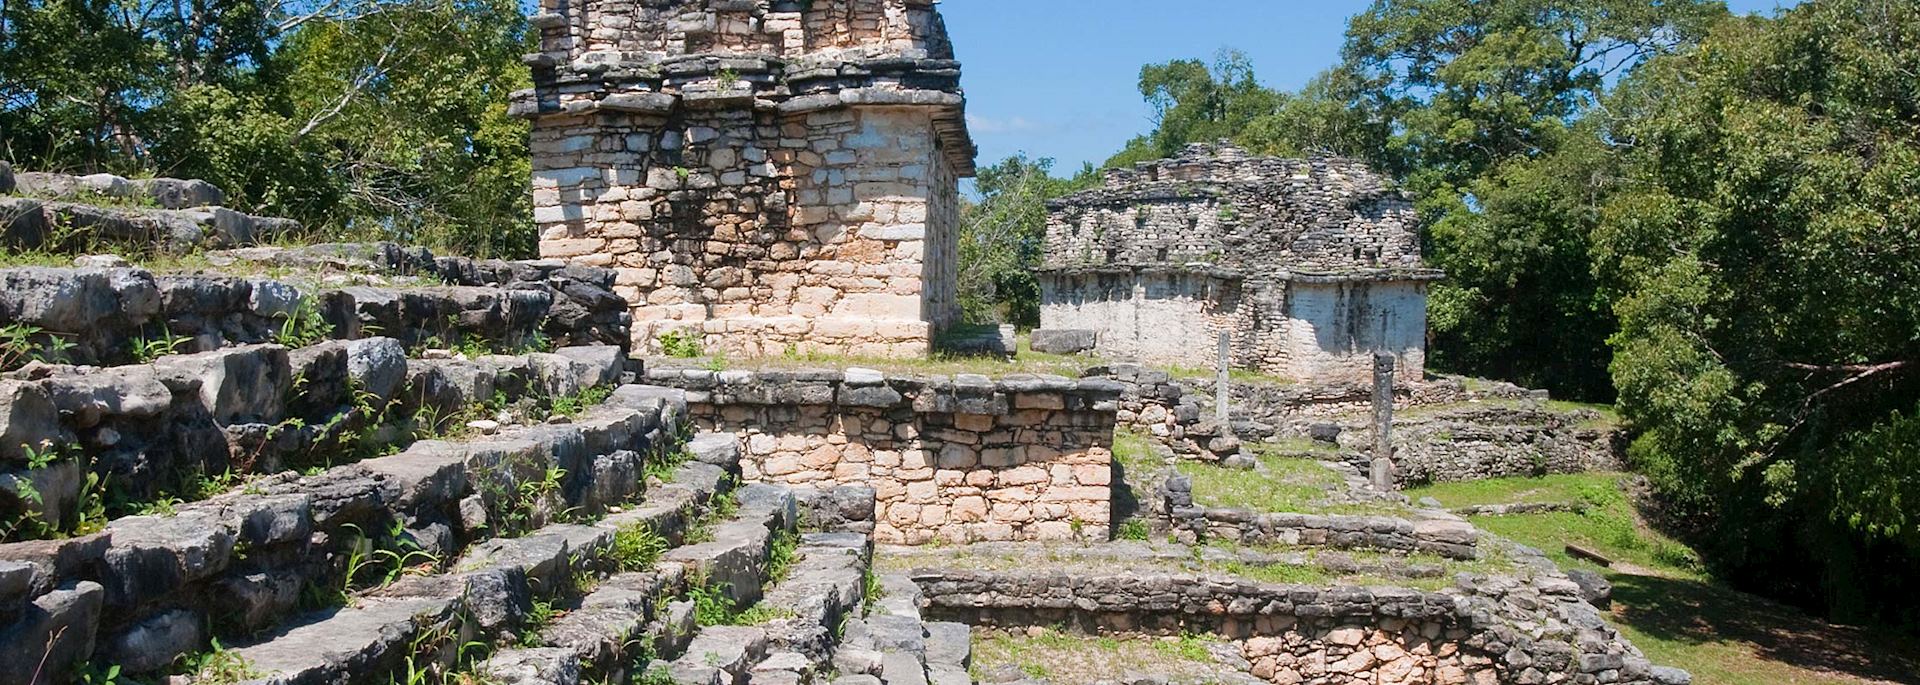 Yaxchilan ruins